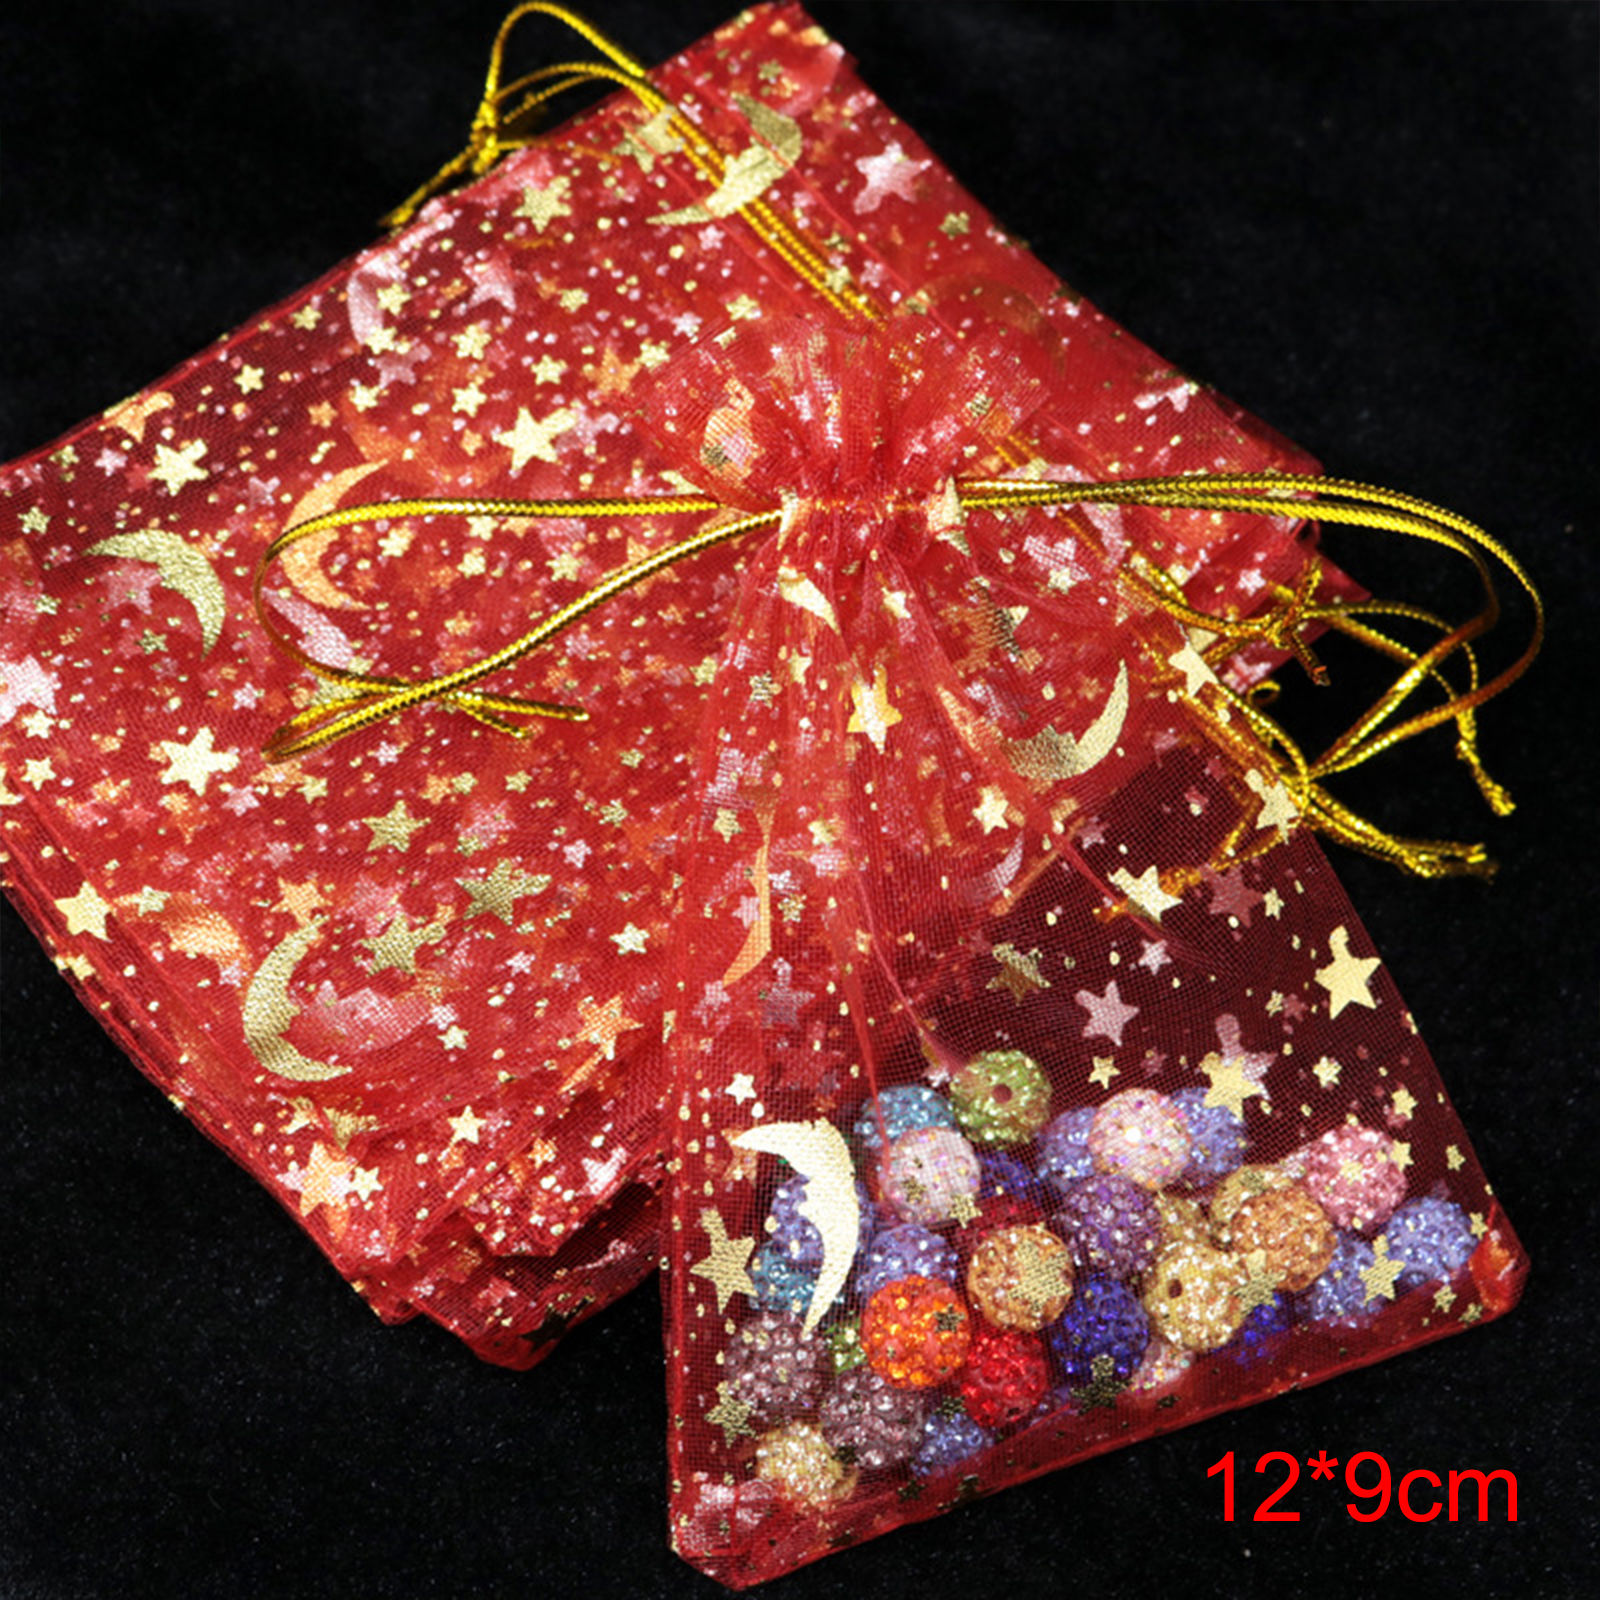 Picture of Wedding Gift Organza Galaxy Drawstring Bags Half Moon Red Star 12cm x9cm(4 6/8" x3 4/8"), 20 PCs